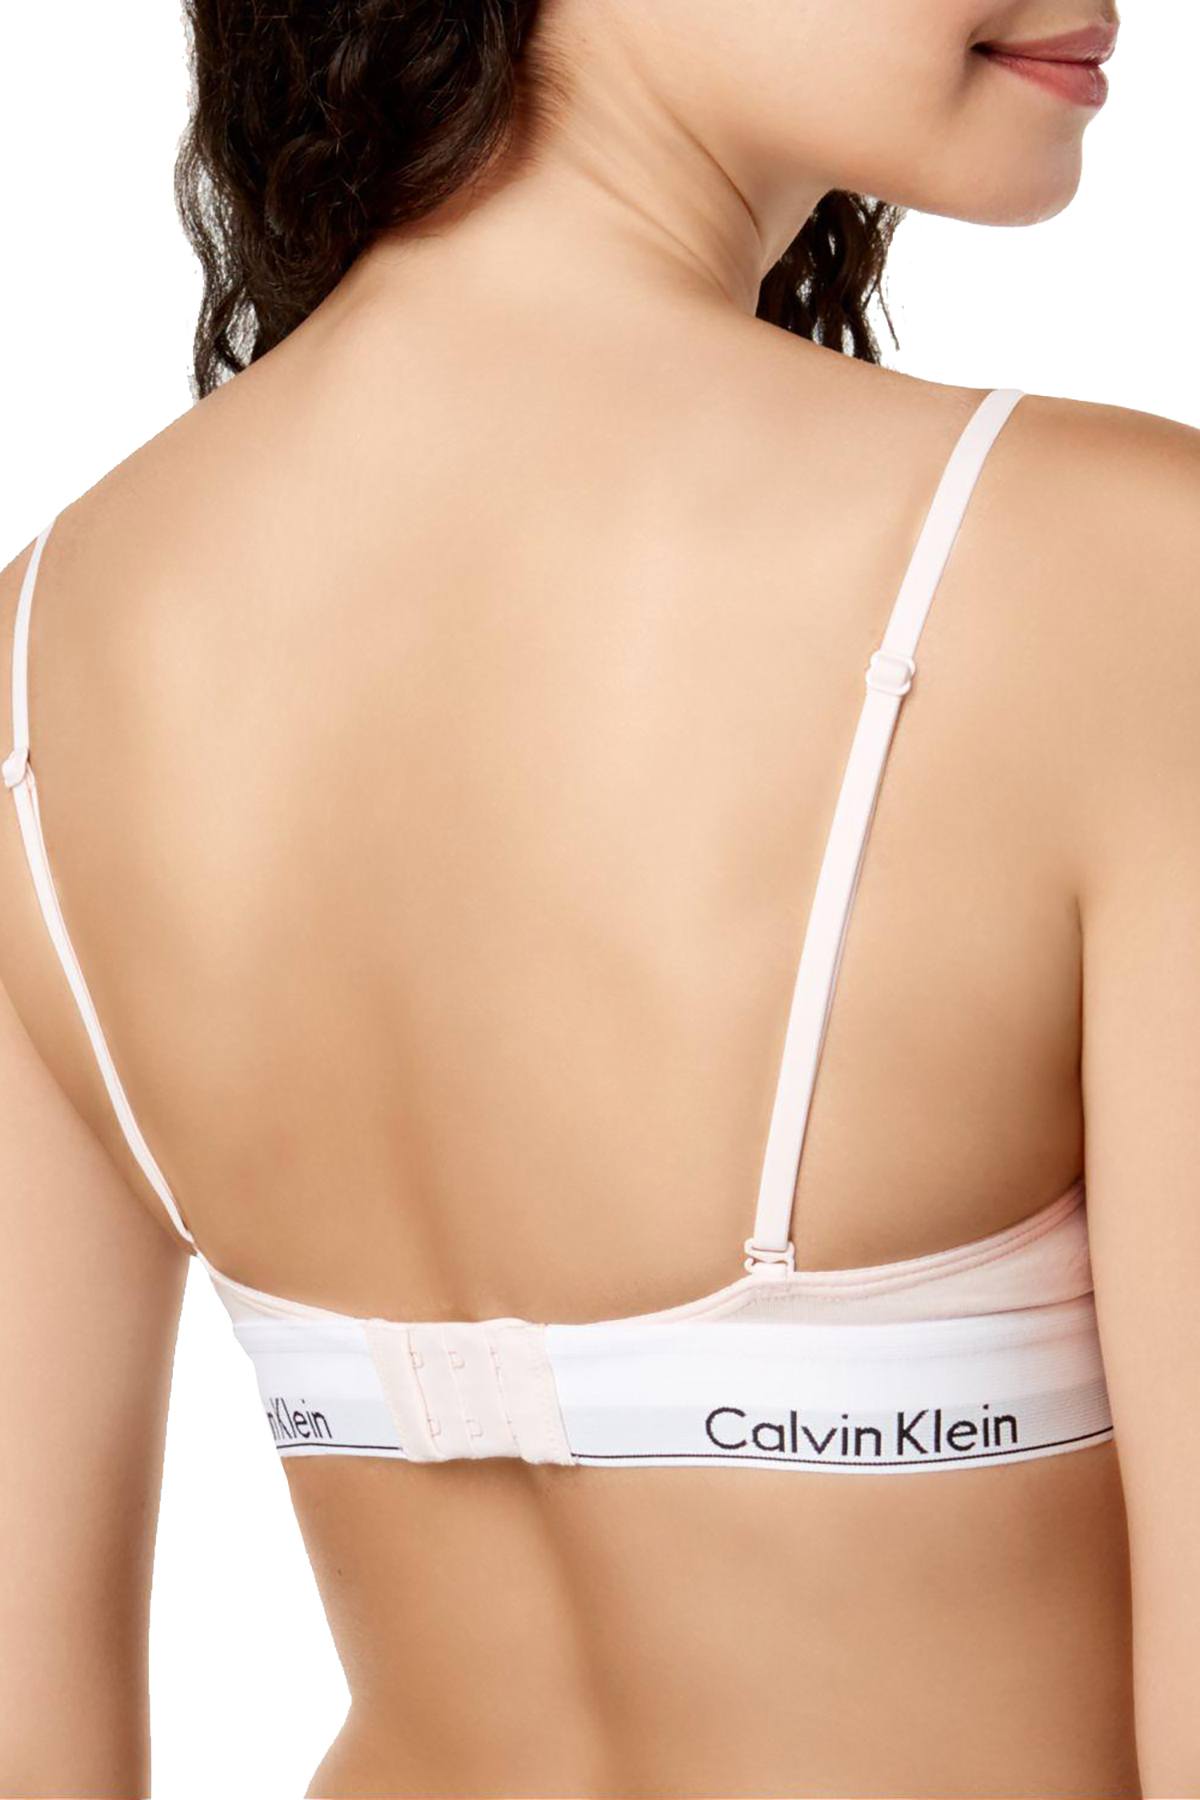 Calvin Klein Women's Striped Lace Triangle Bralette QF5872 Nymph's Thigh